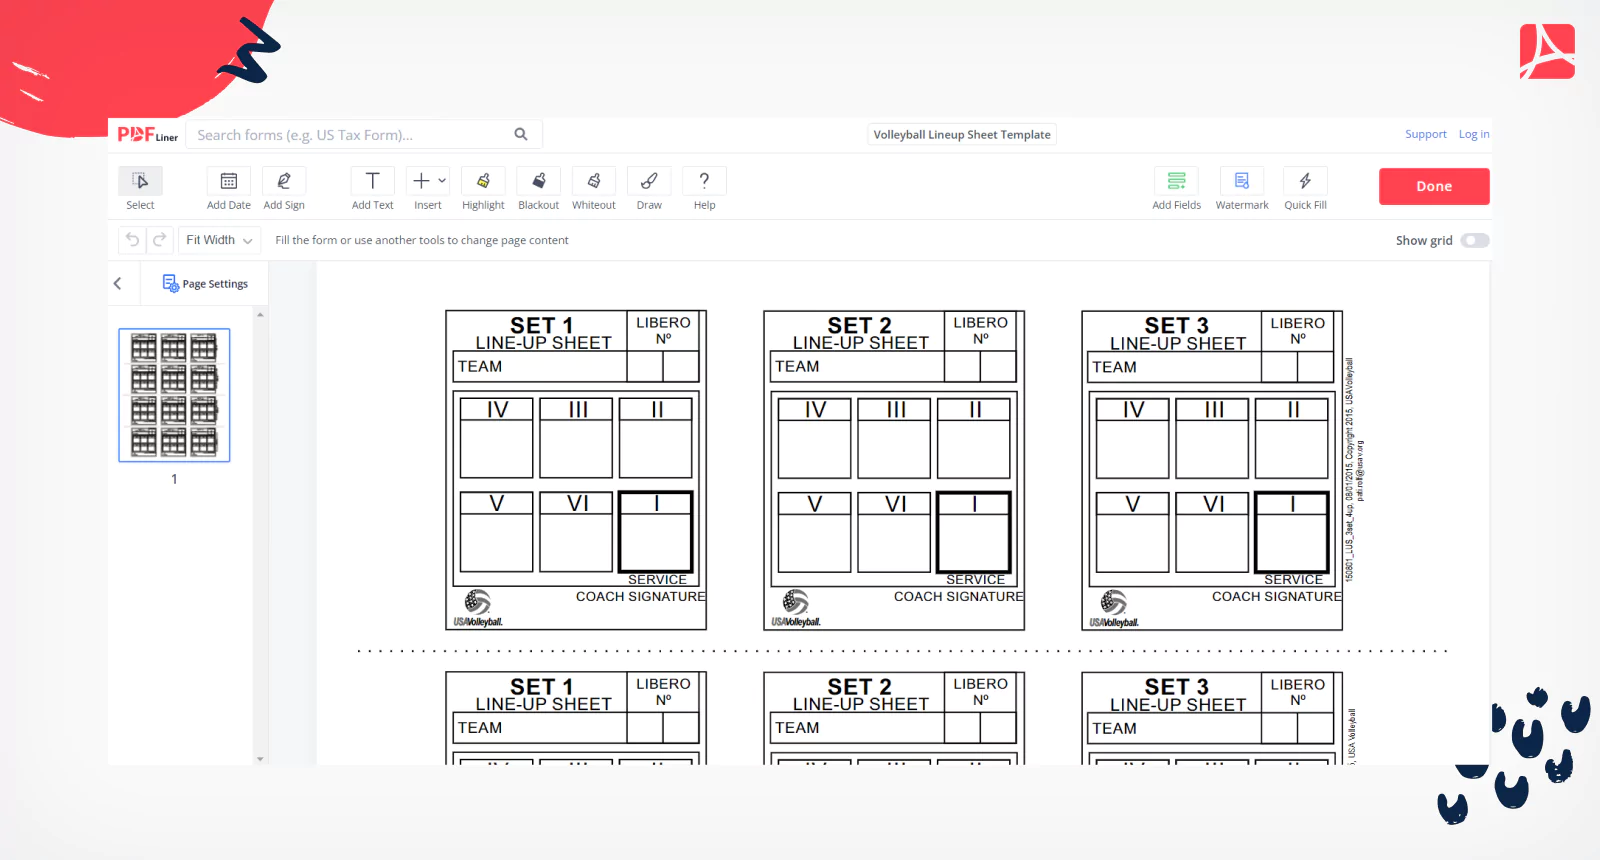 Volleyball Lineup Sheet Template on PDFLiner